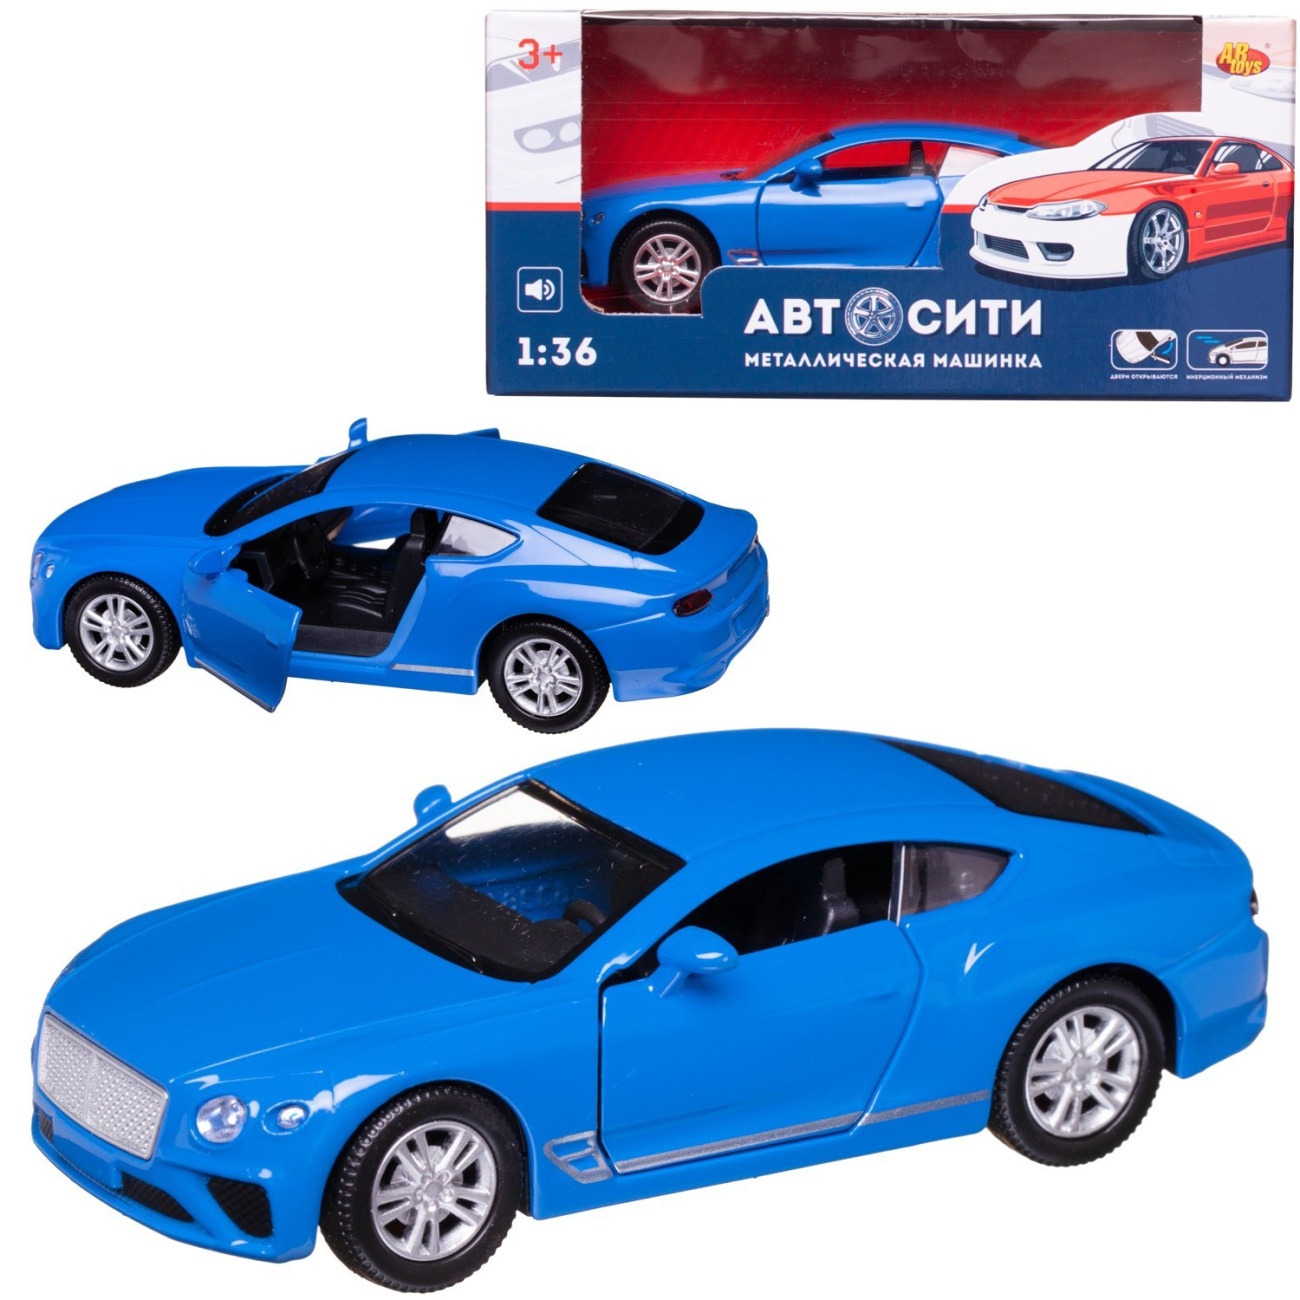 Машинка металл Abtoys АвтоСити 1:36 Седан купе инерция, двери откр., синий свет/звук C-00523/синий